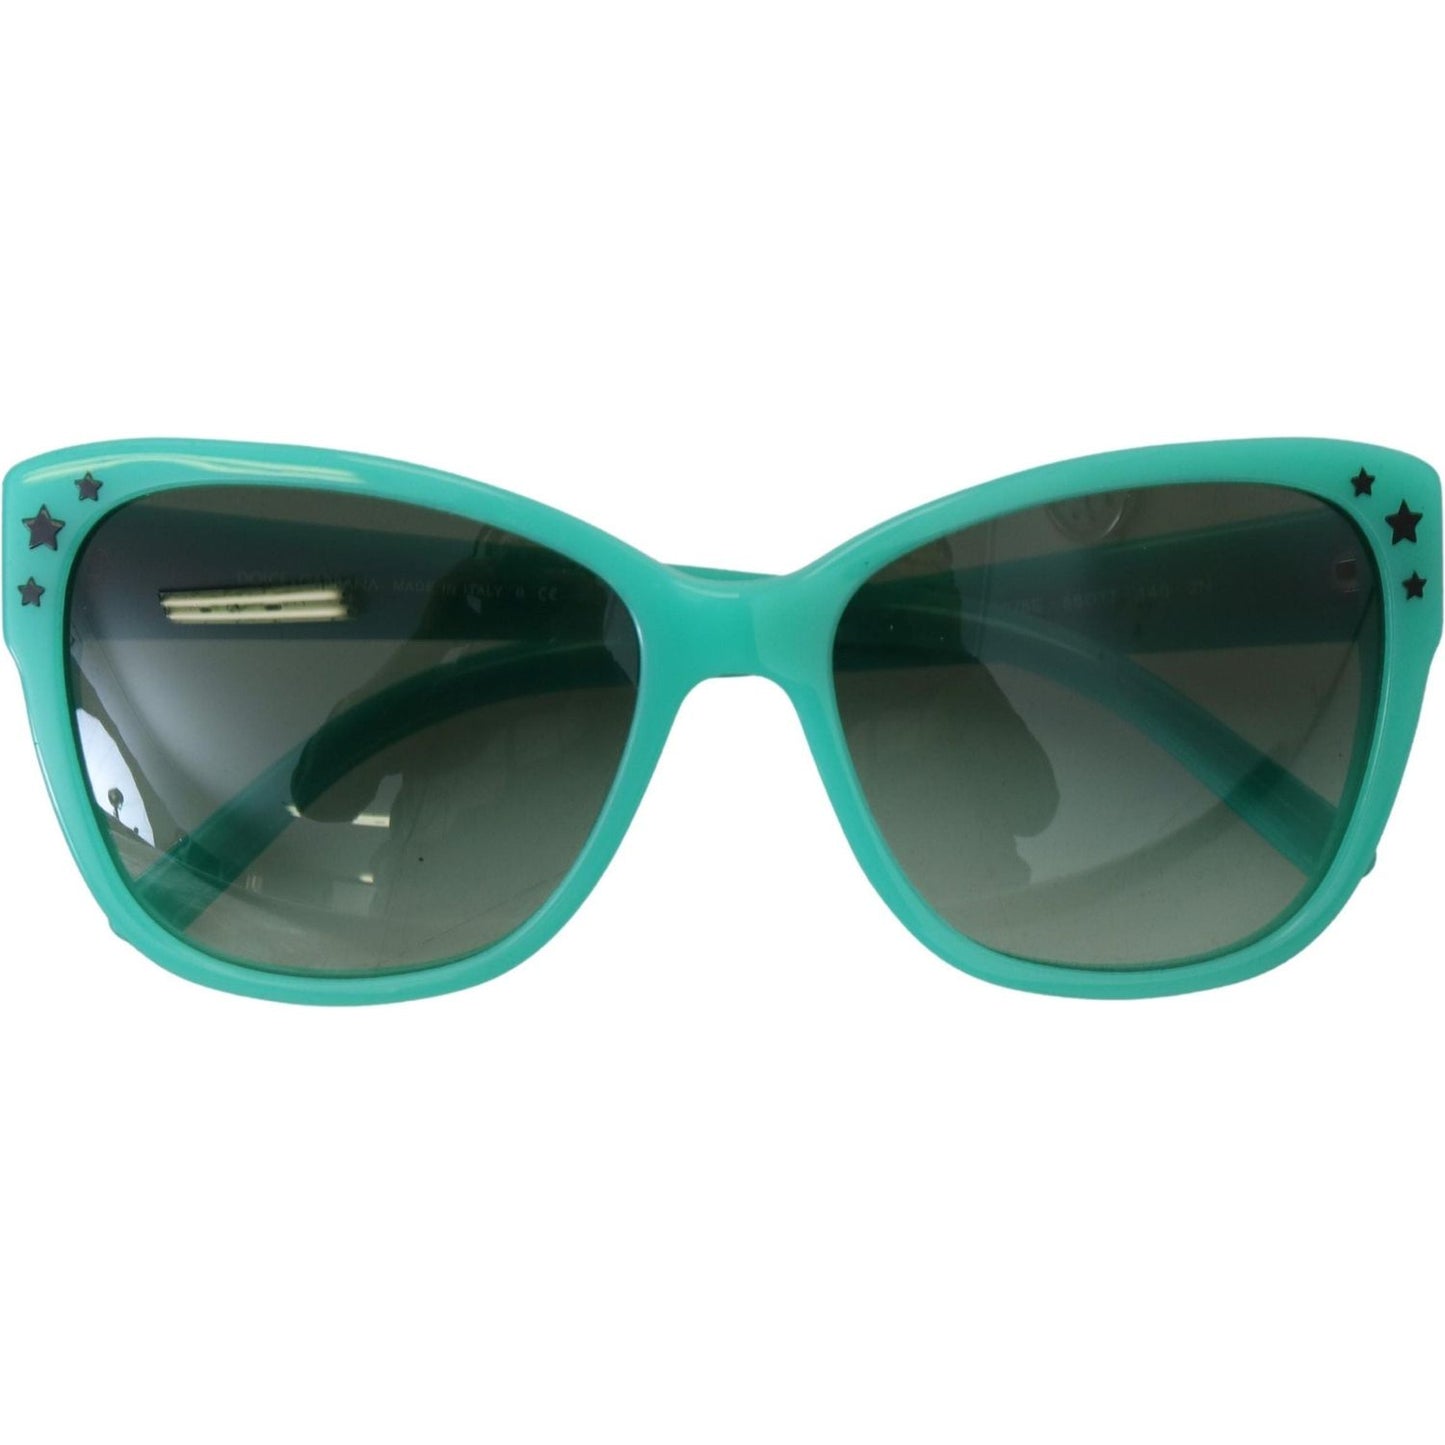 Dolce & Gabbana Enigmatic Star-Patterned Square Sunglasses green-stars-acetate-square-shades-dg4124-sunglasses